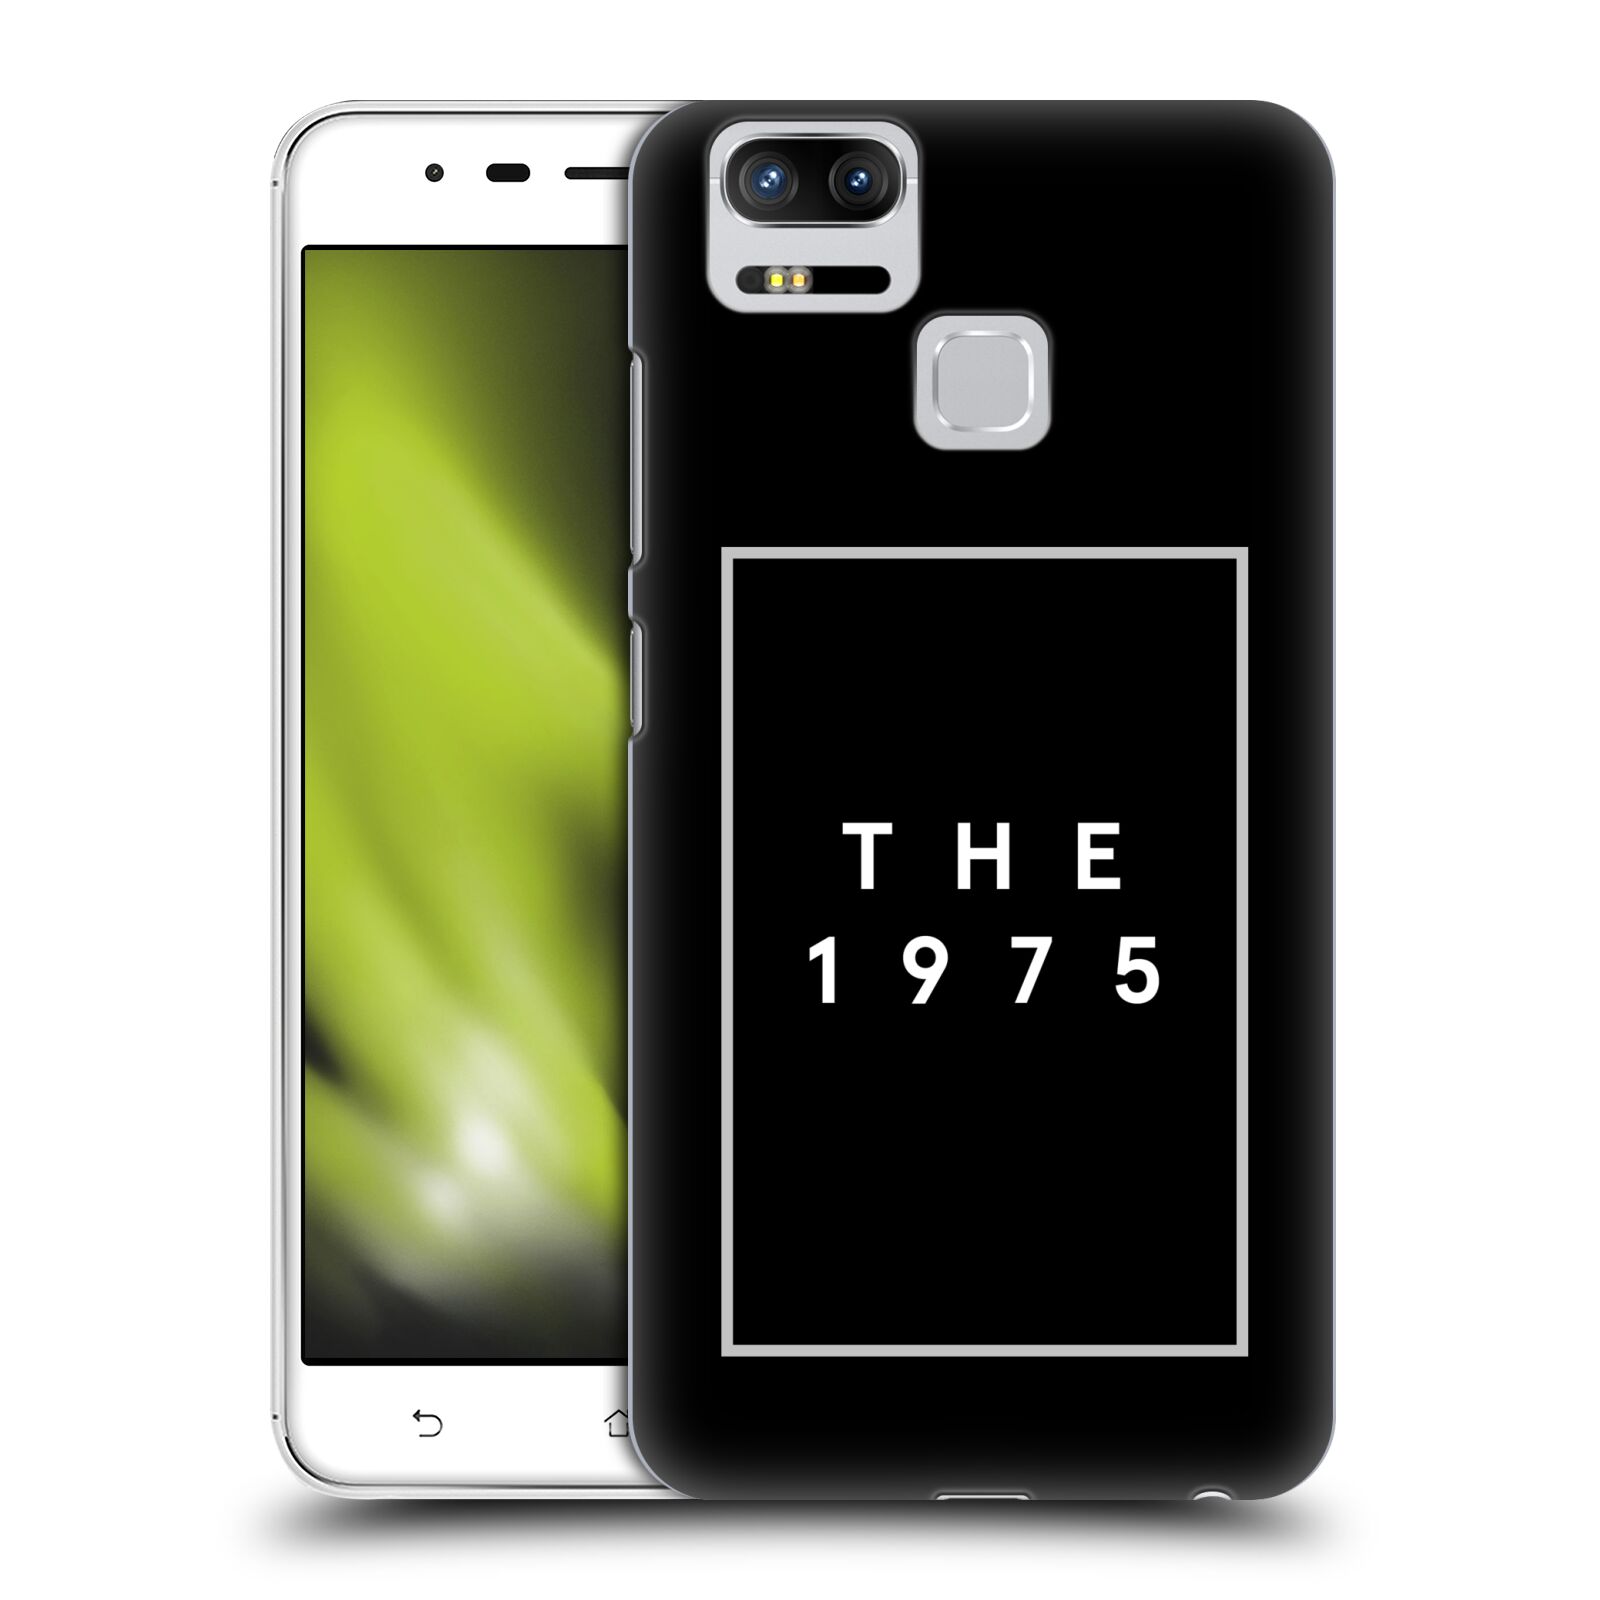 HEAD CASE plastový obal na mobil Asus Zenfone 3 Zoom ZE553KL indie rock skupina The 1975 černá